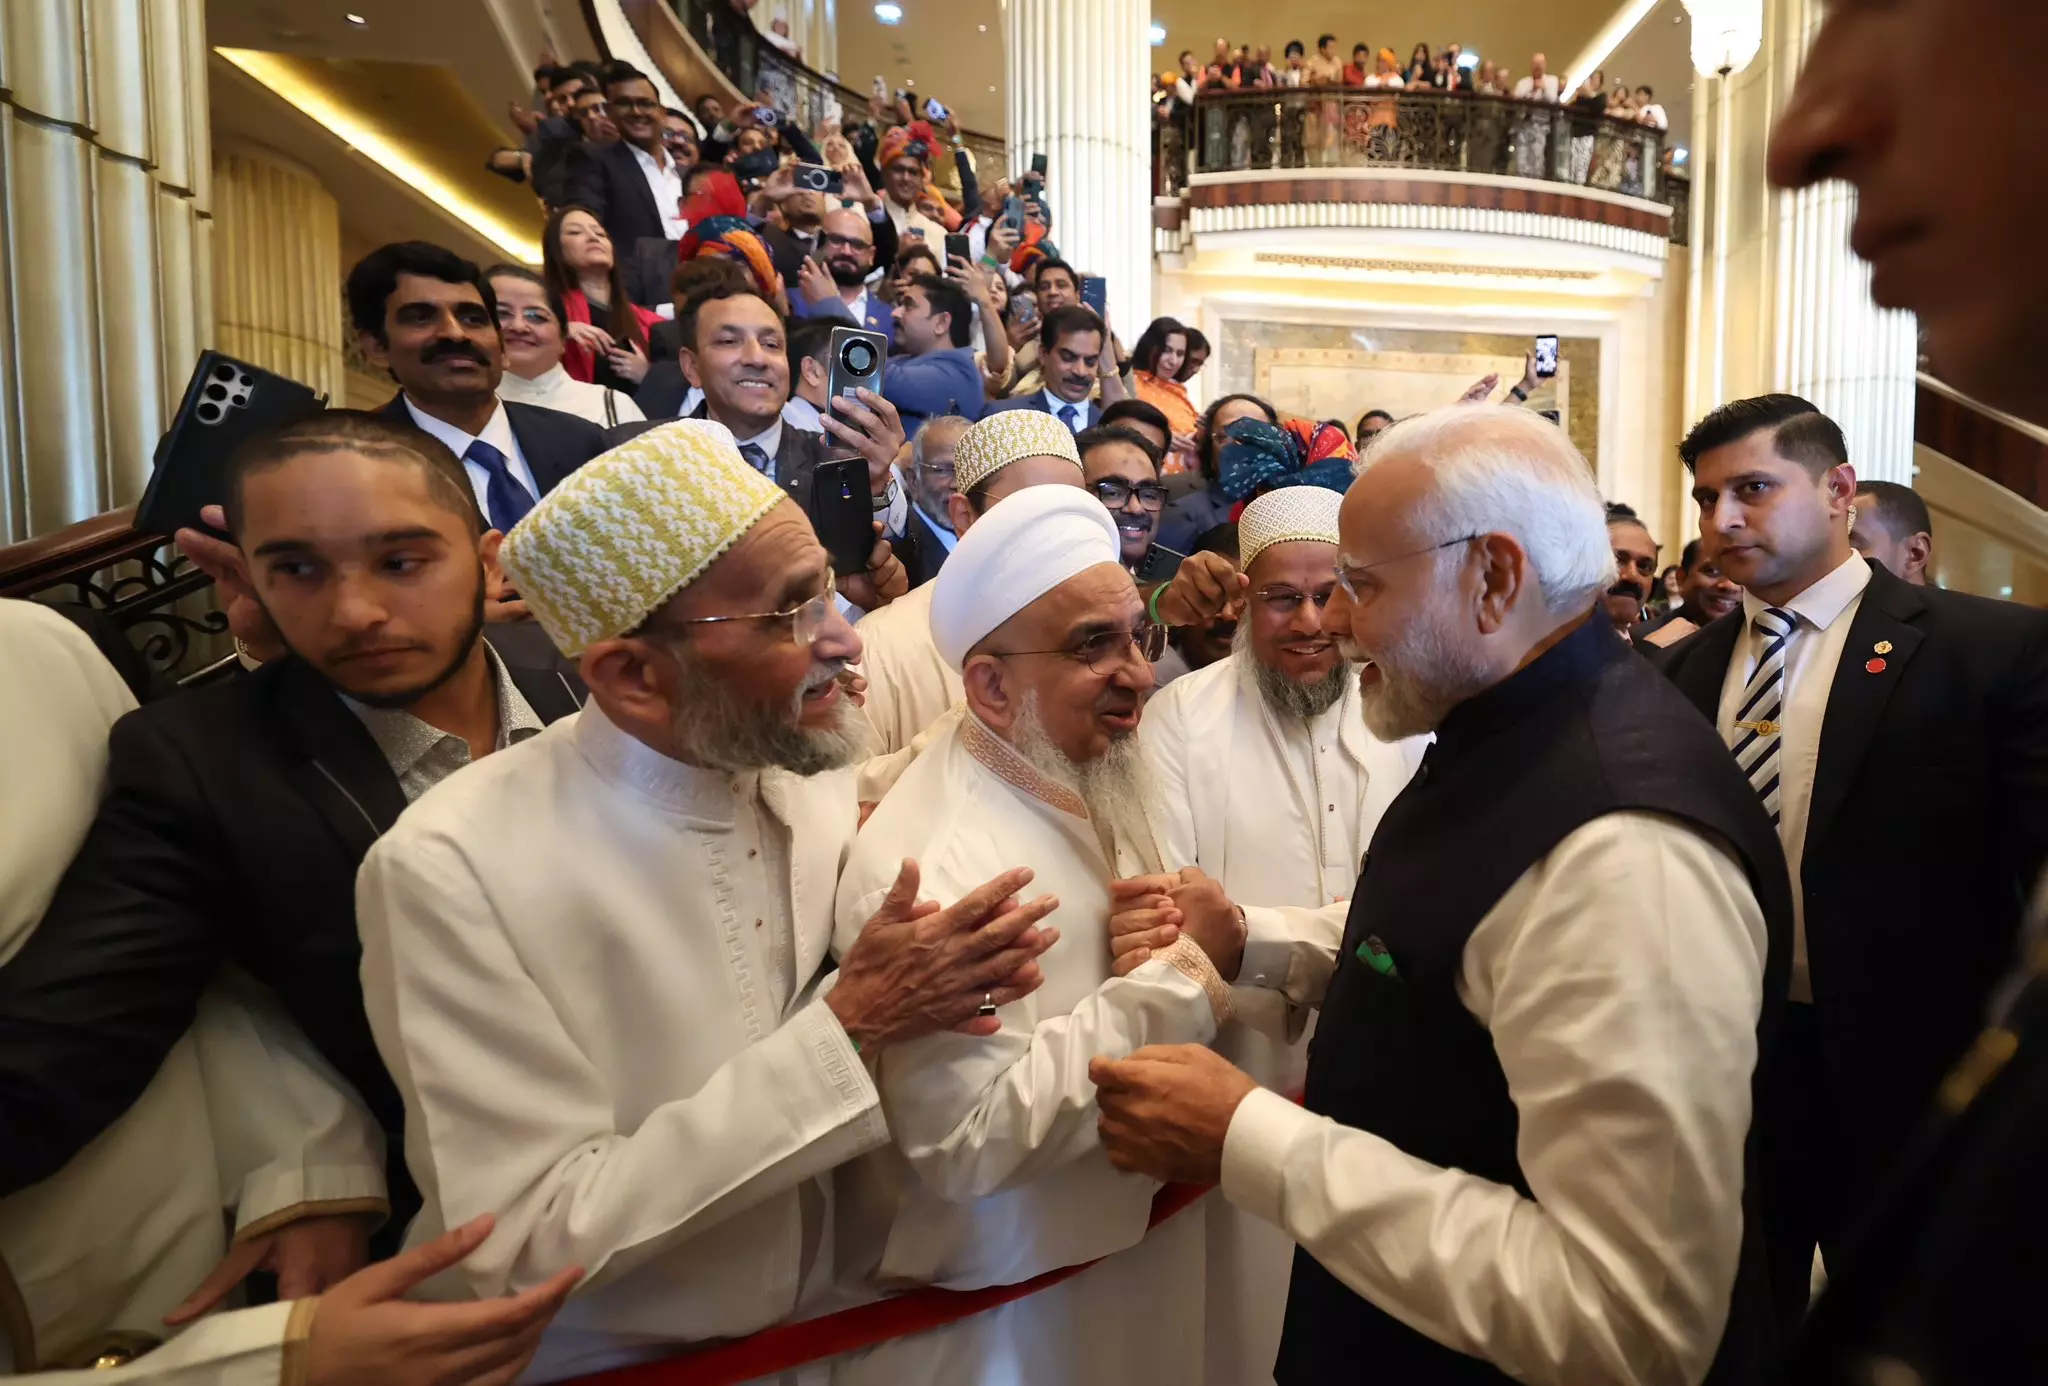 PM Modi arrives in UAE, receives warm welcome by ecstatic diaspora members